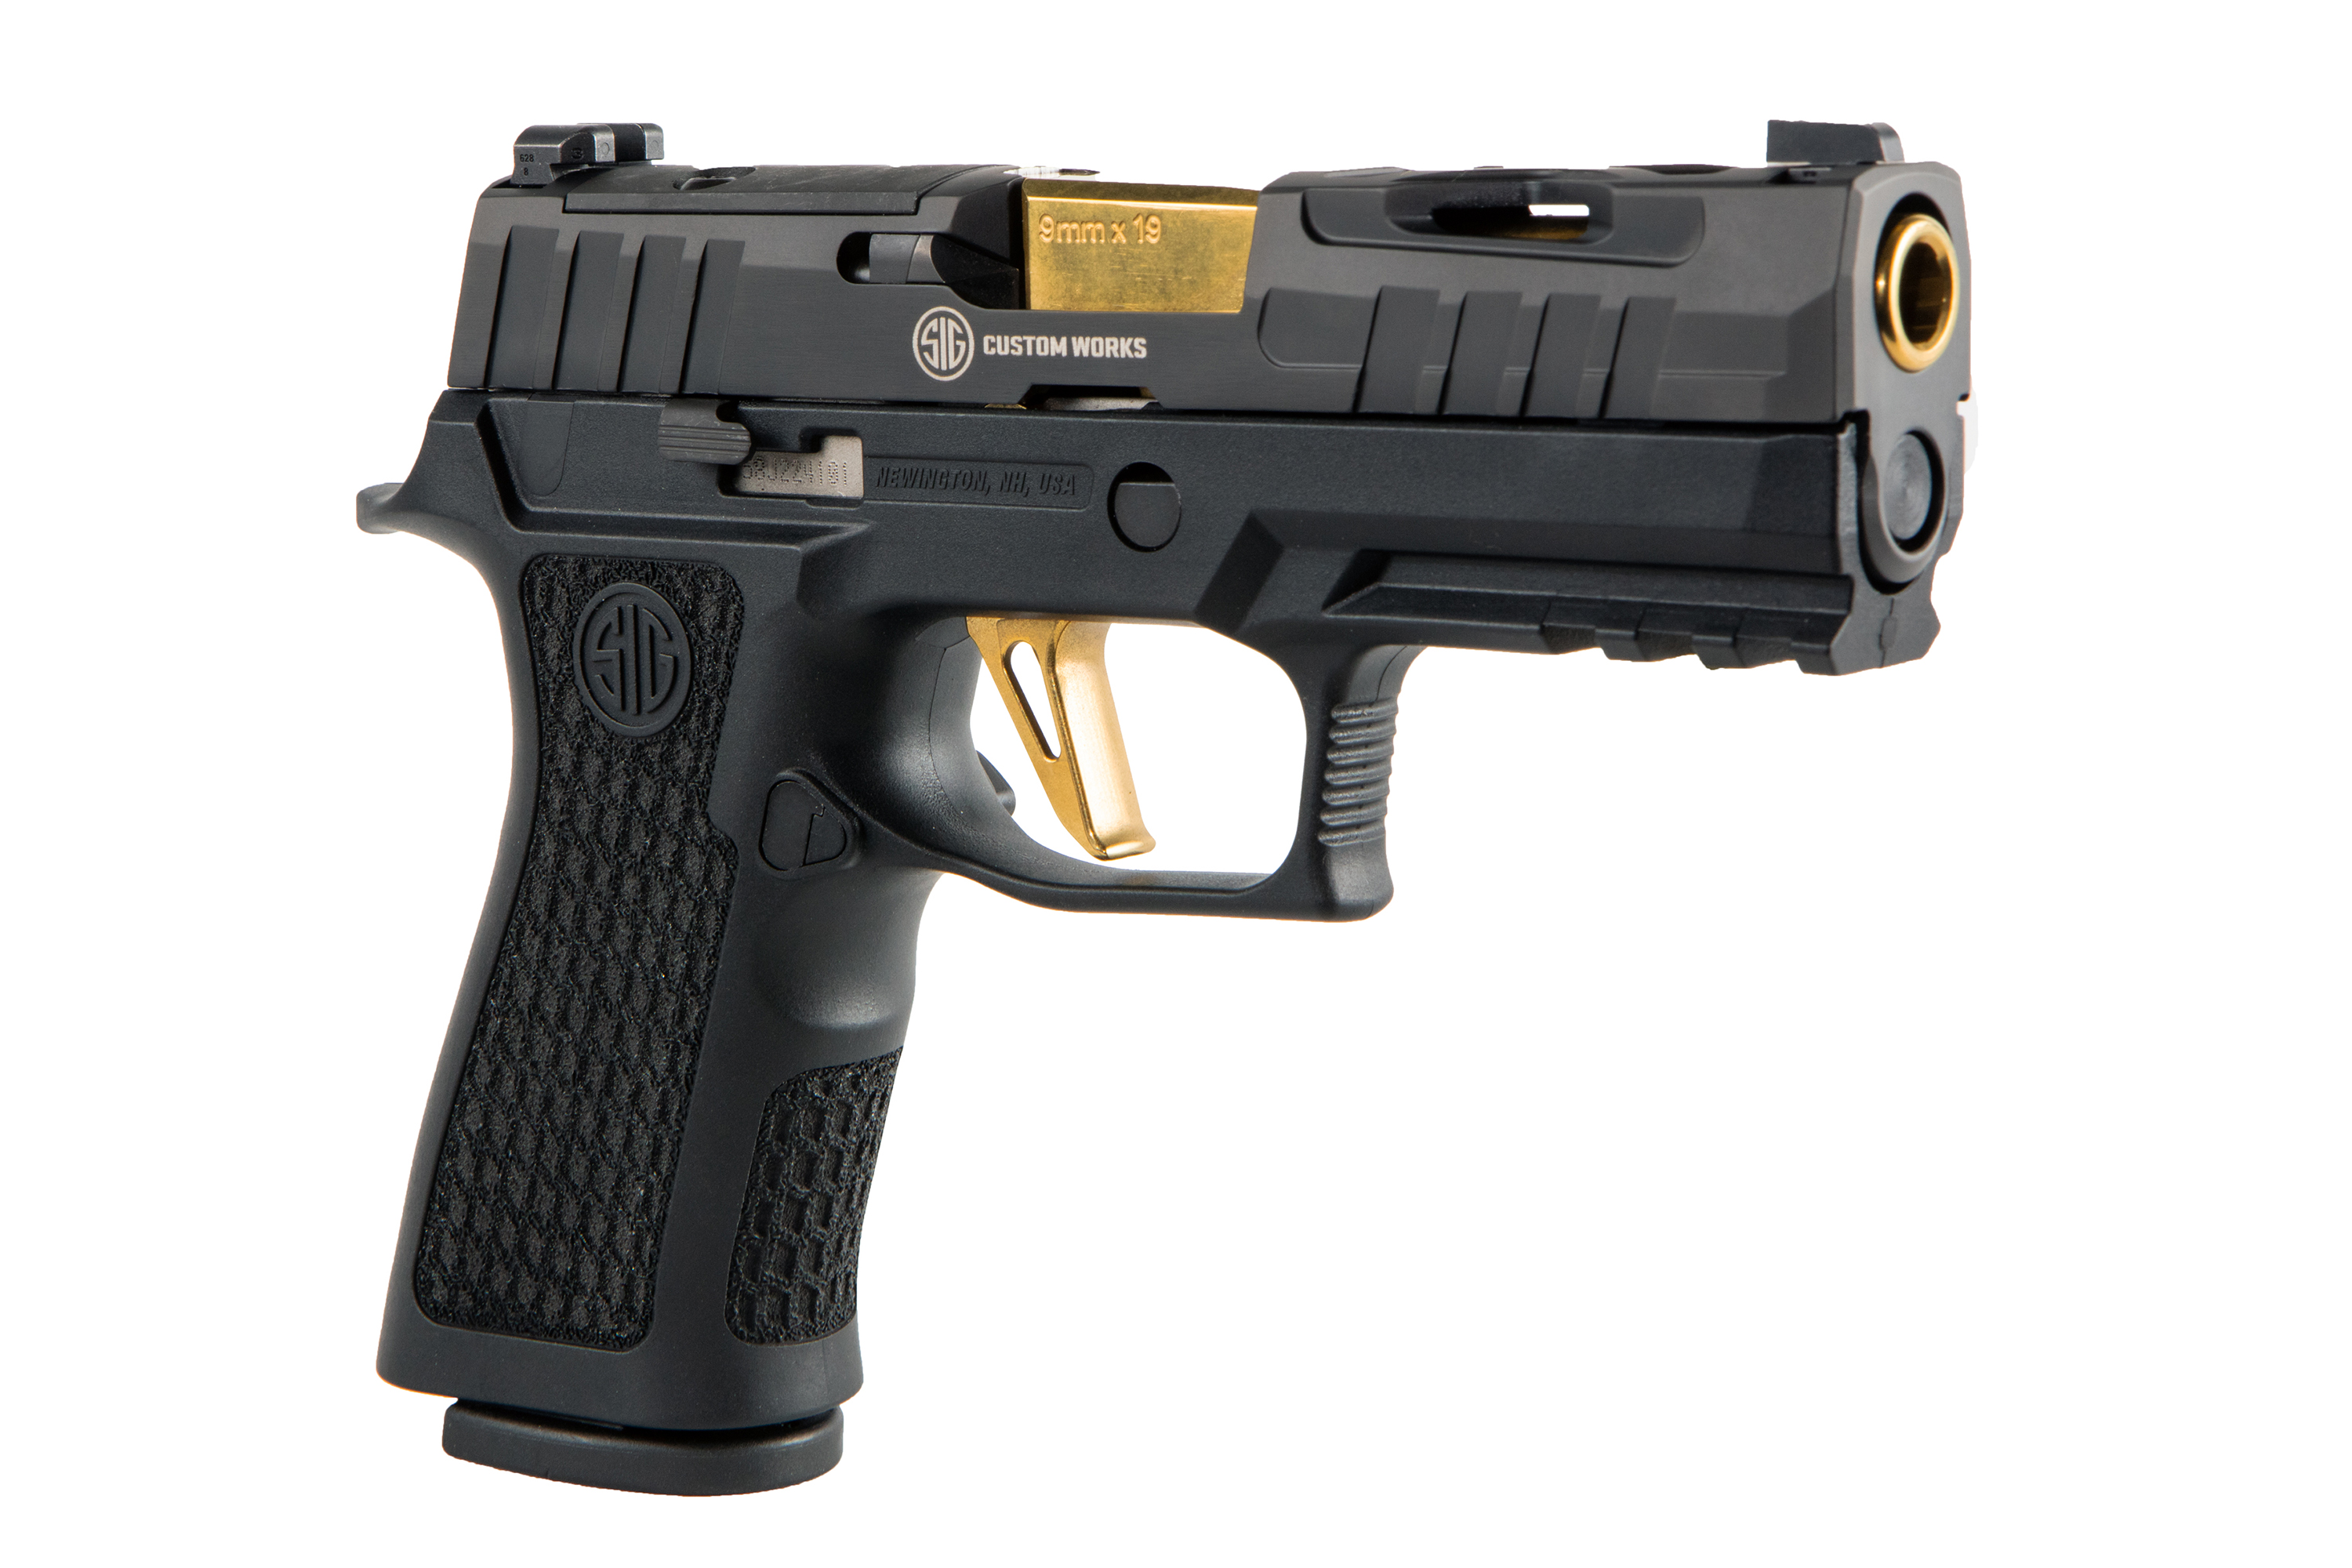 Sig Sauer P320 XCarry Spectre Schwarz 9mm Luger - Selbstladepistole